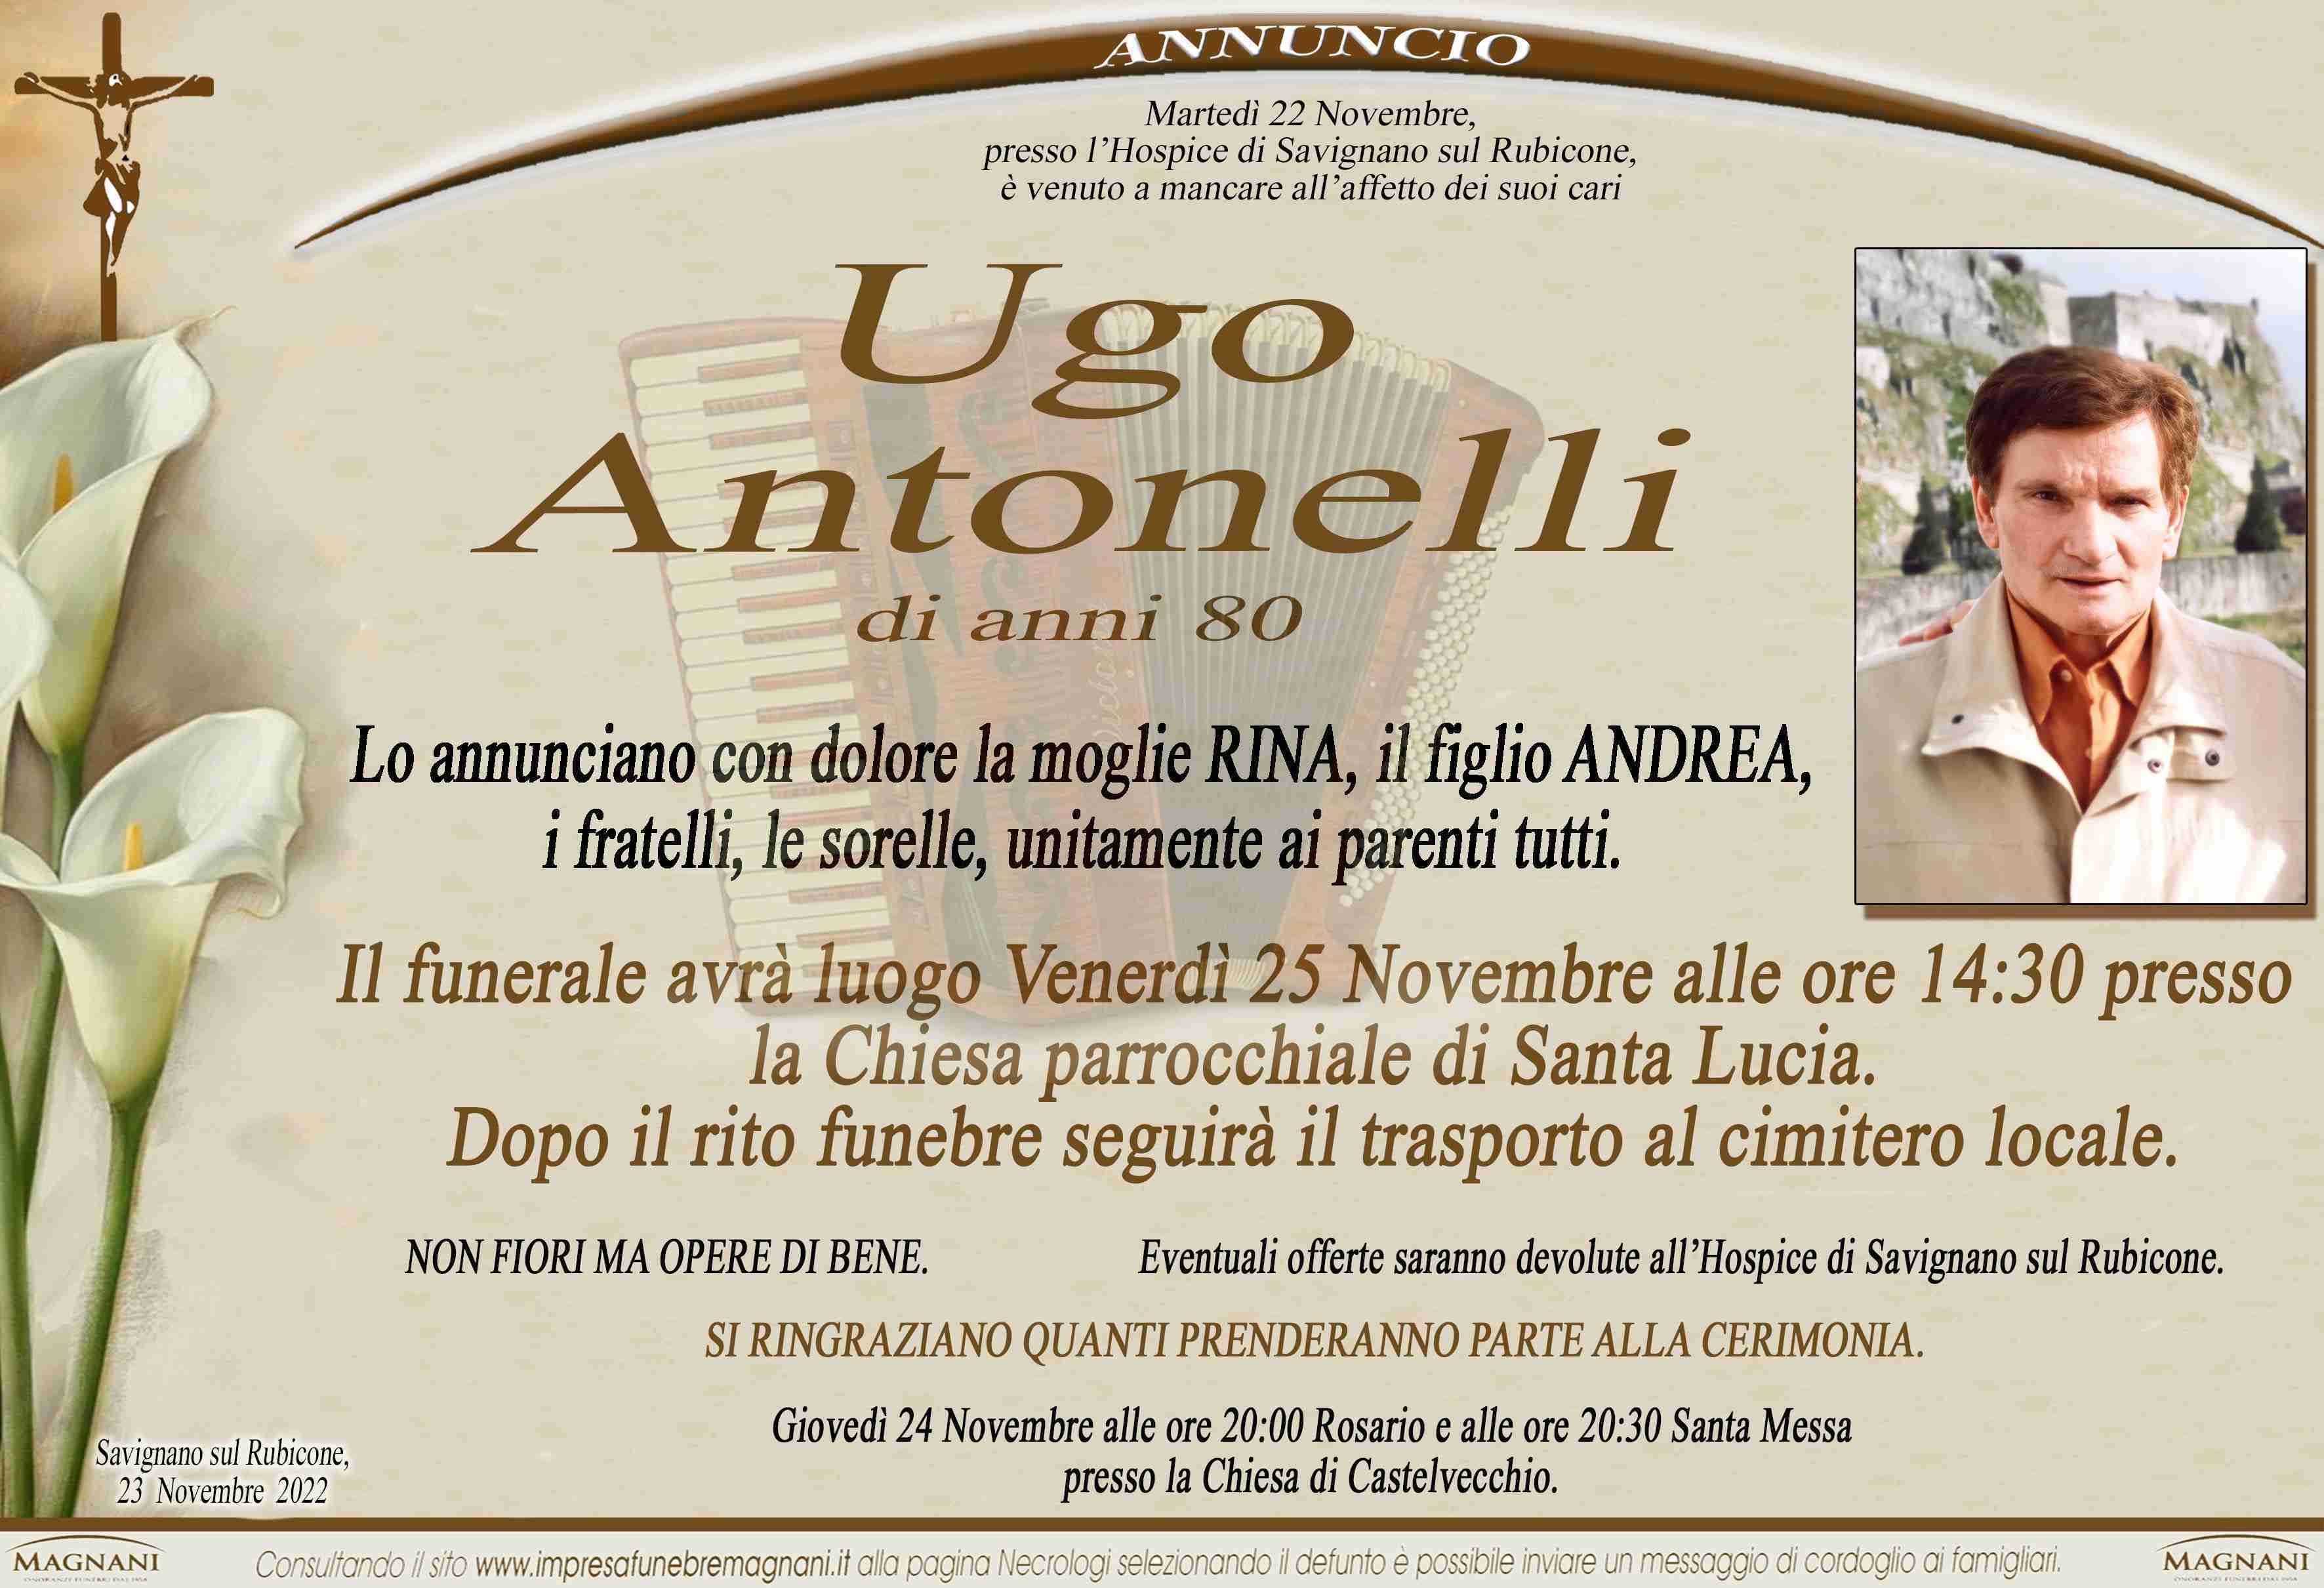 Ugo Antonelli